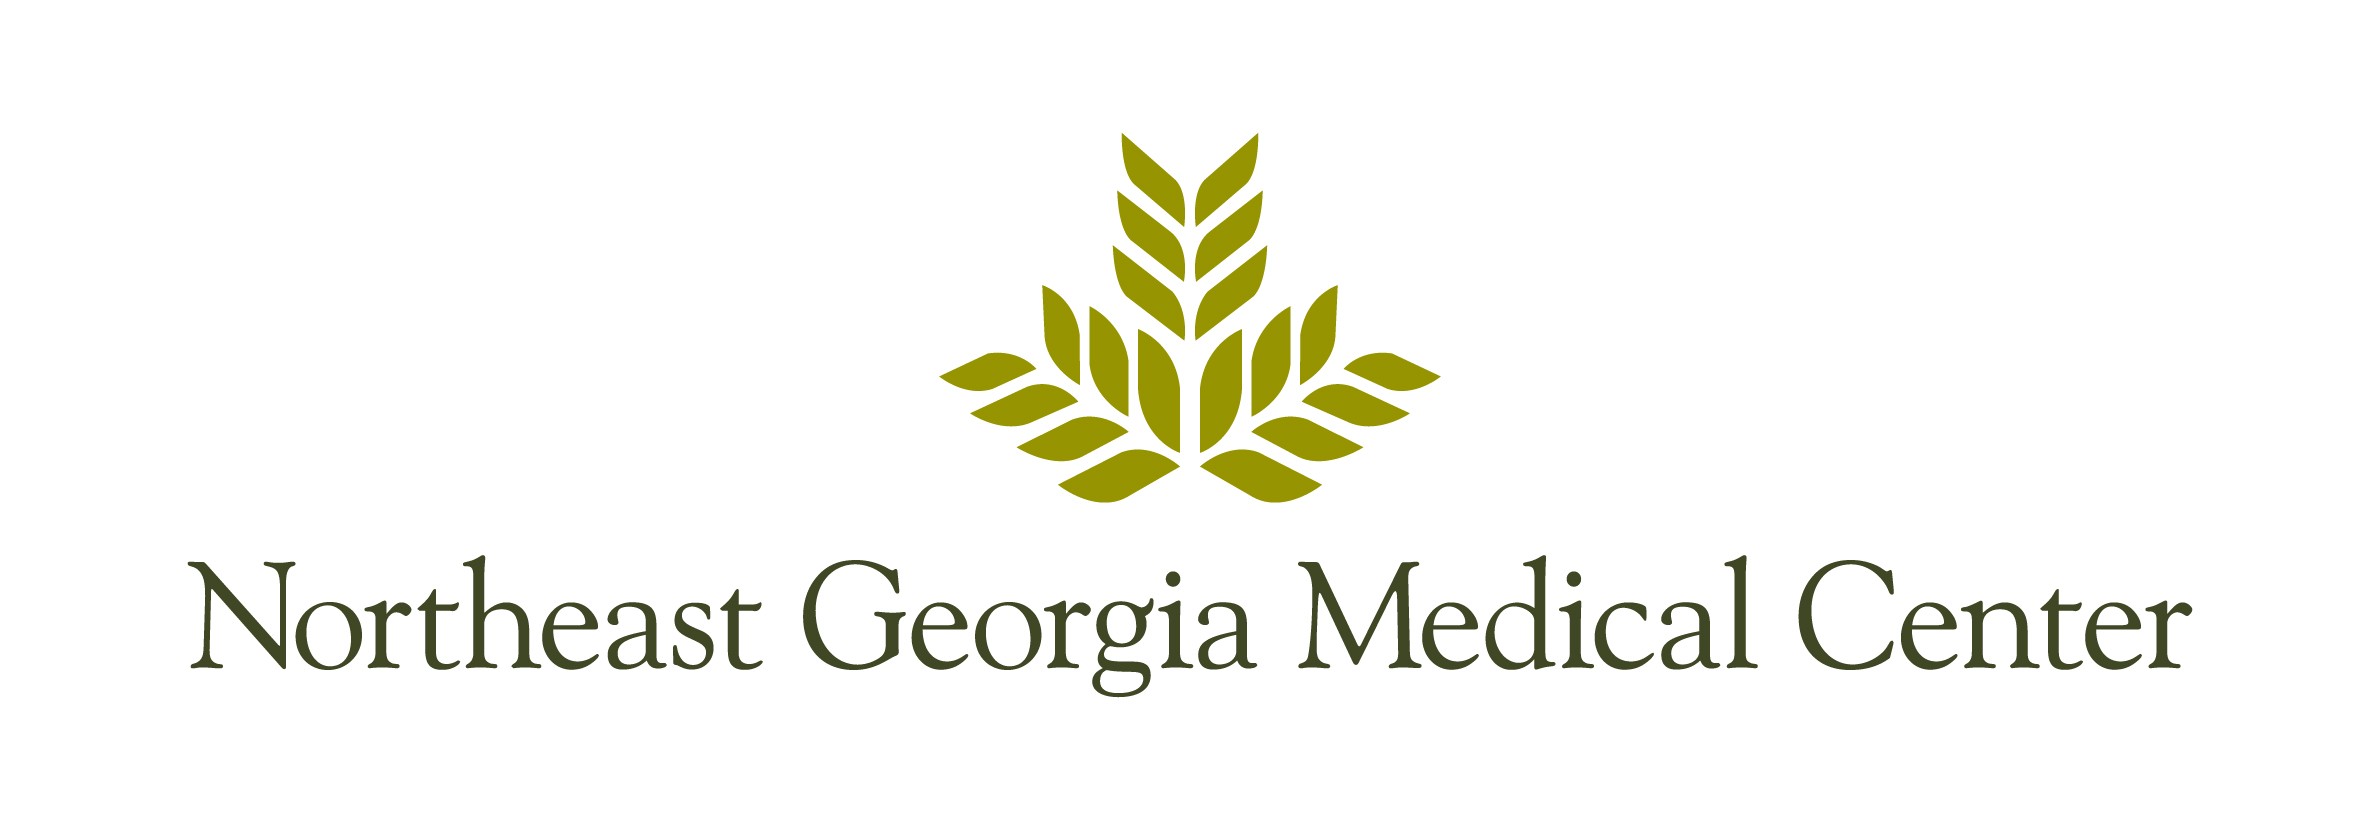 Northeast Georgia Medical Center